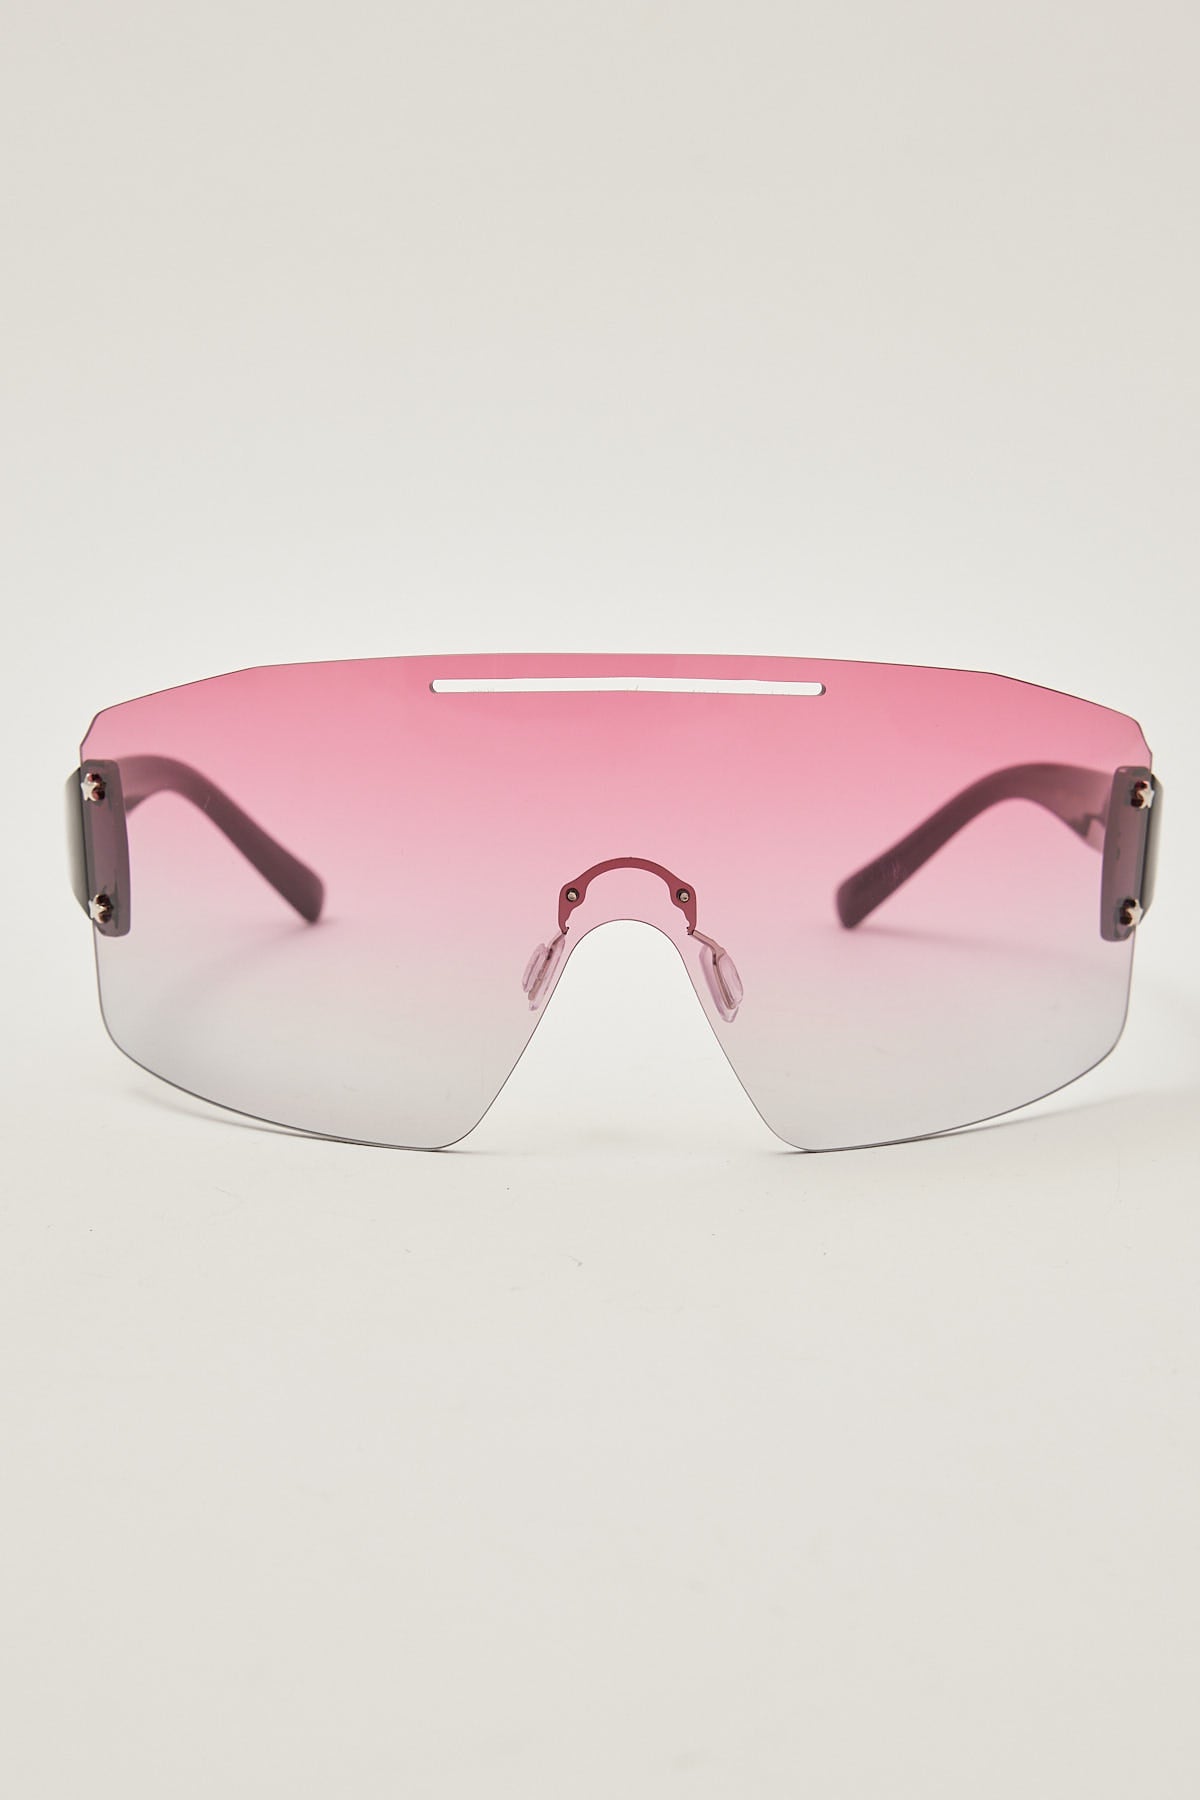 Angels Whisper BFFL Sunglasses Pink